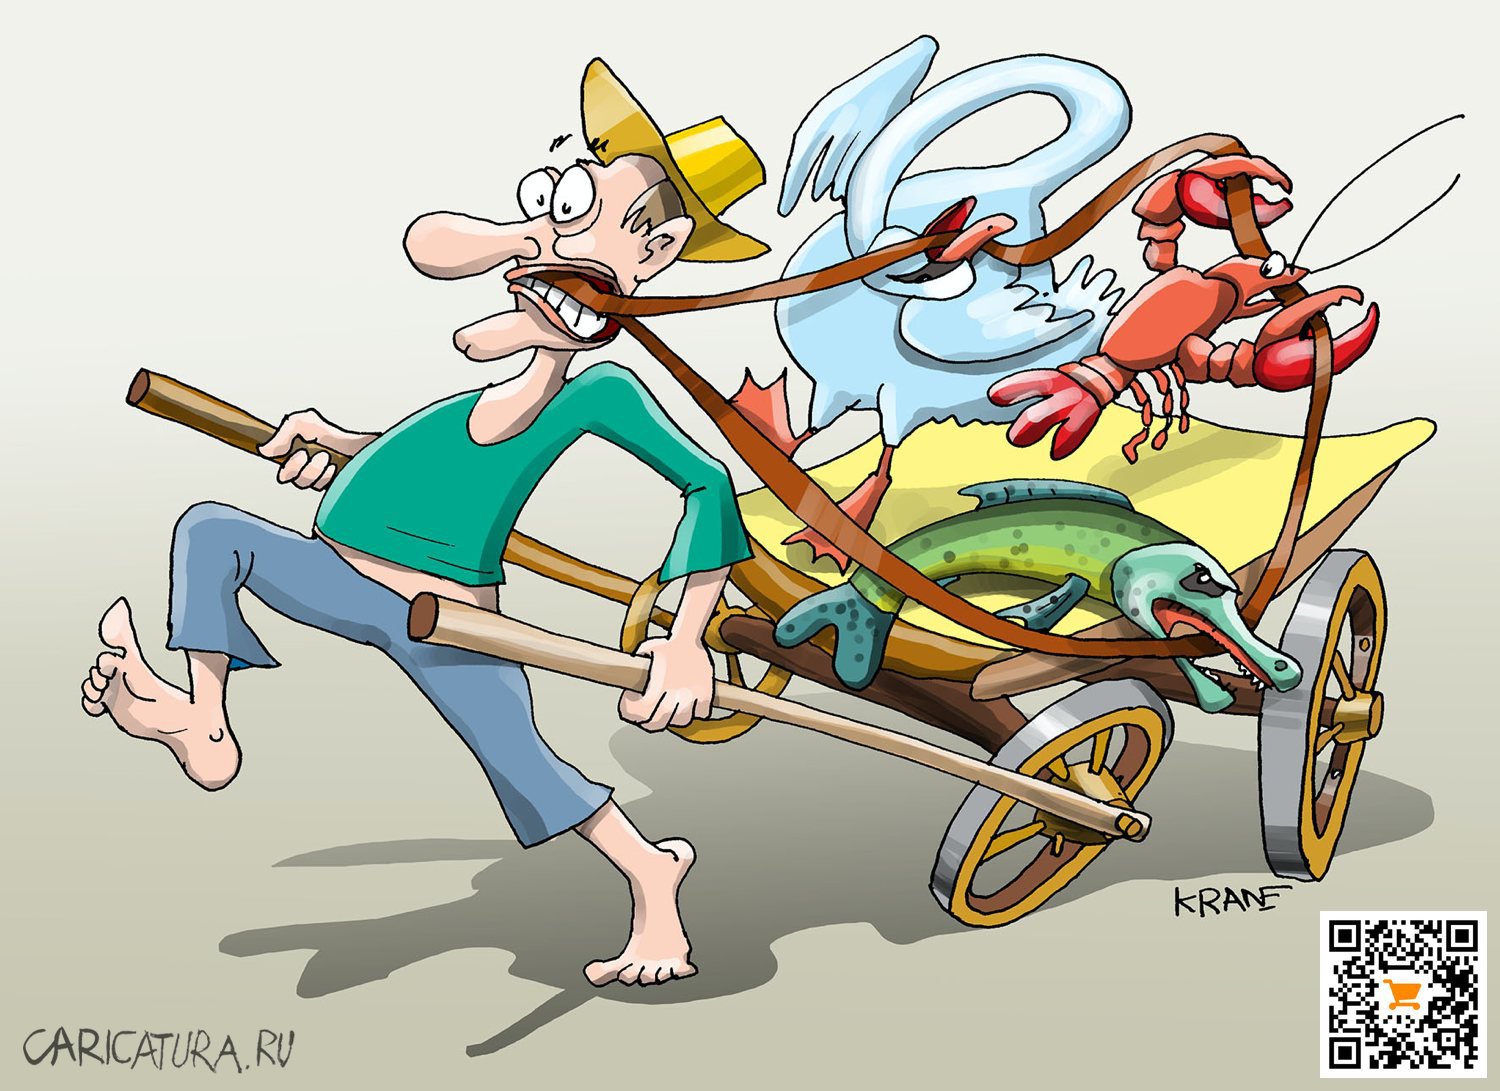 Карикатура "Однажды лебедь, рак да фермер...", Евгений Кран